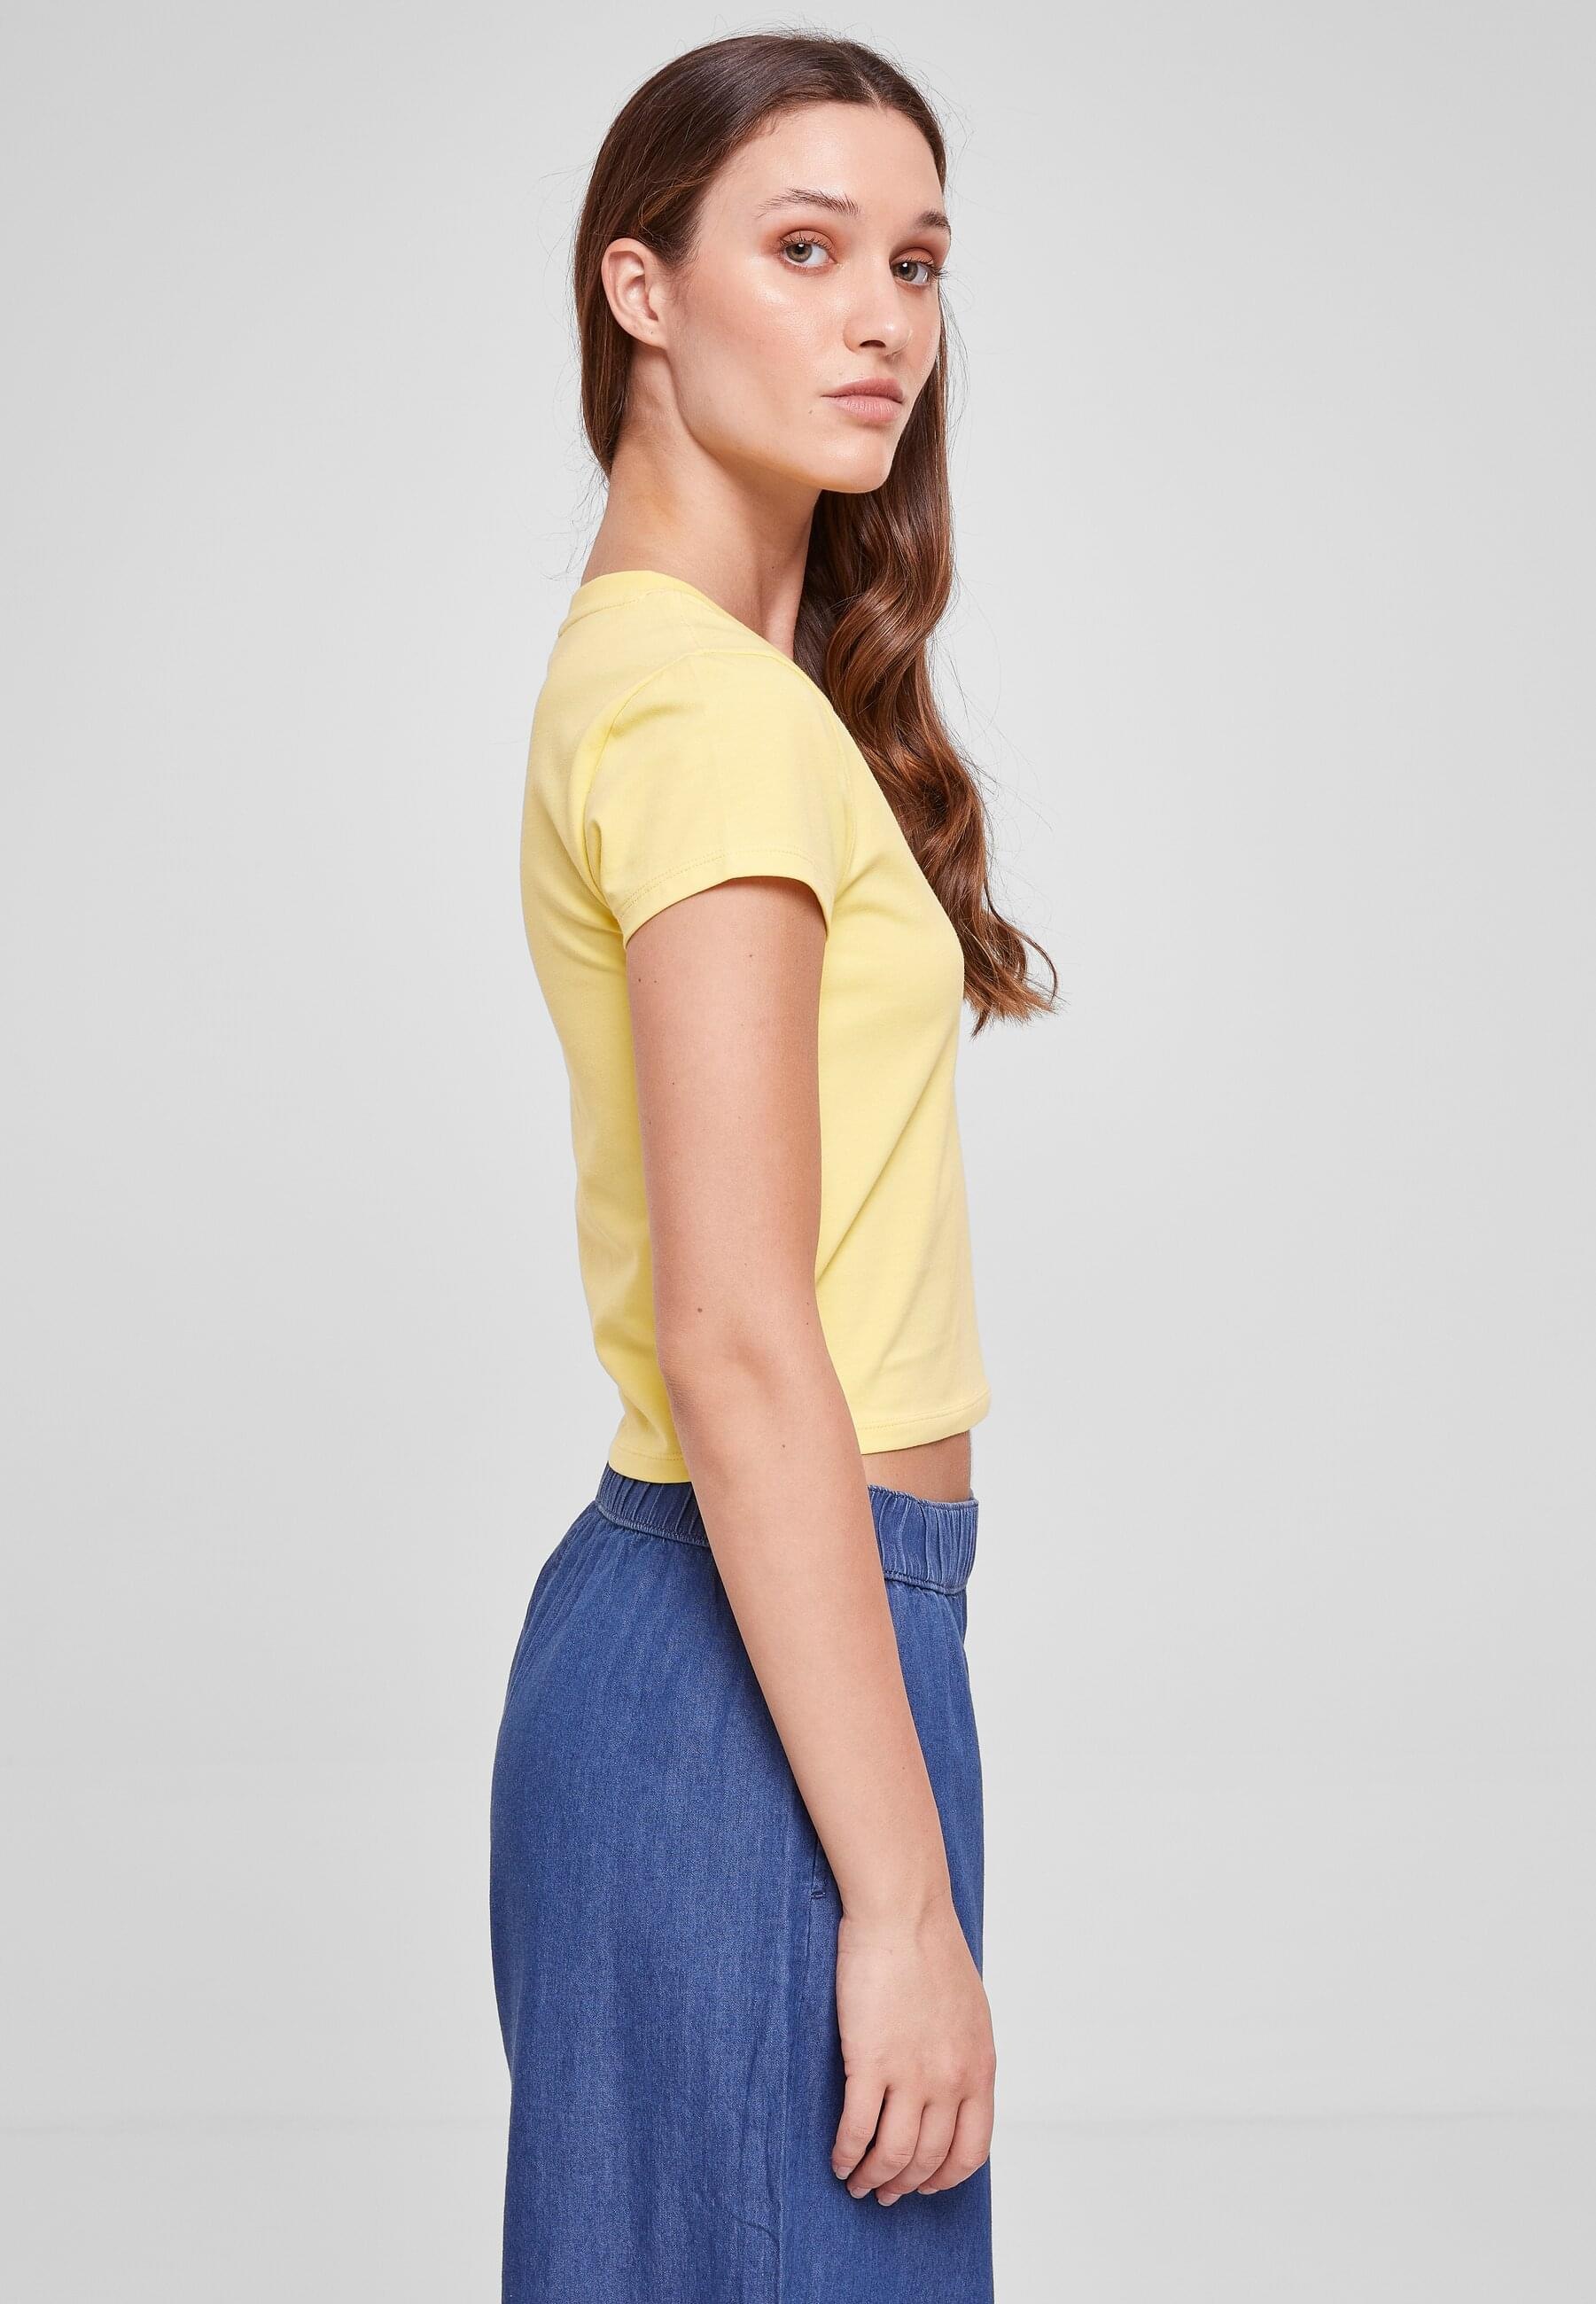 URBAN CLASSICS T-Shirt »Urban Classics Damen Ladies Stretch Jersey Cropped Tee«, (1 tlg.)